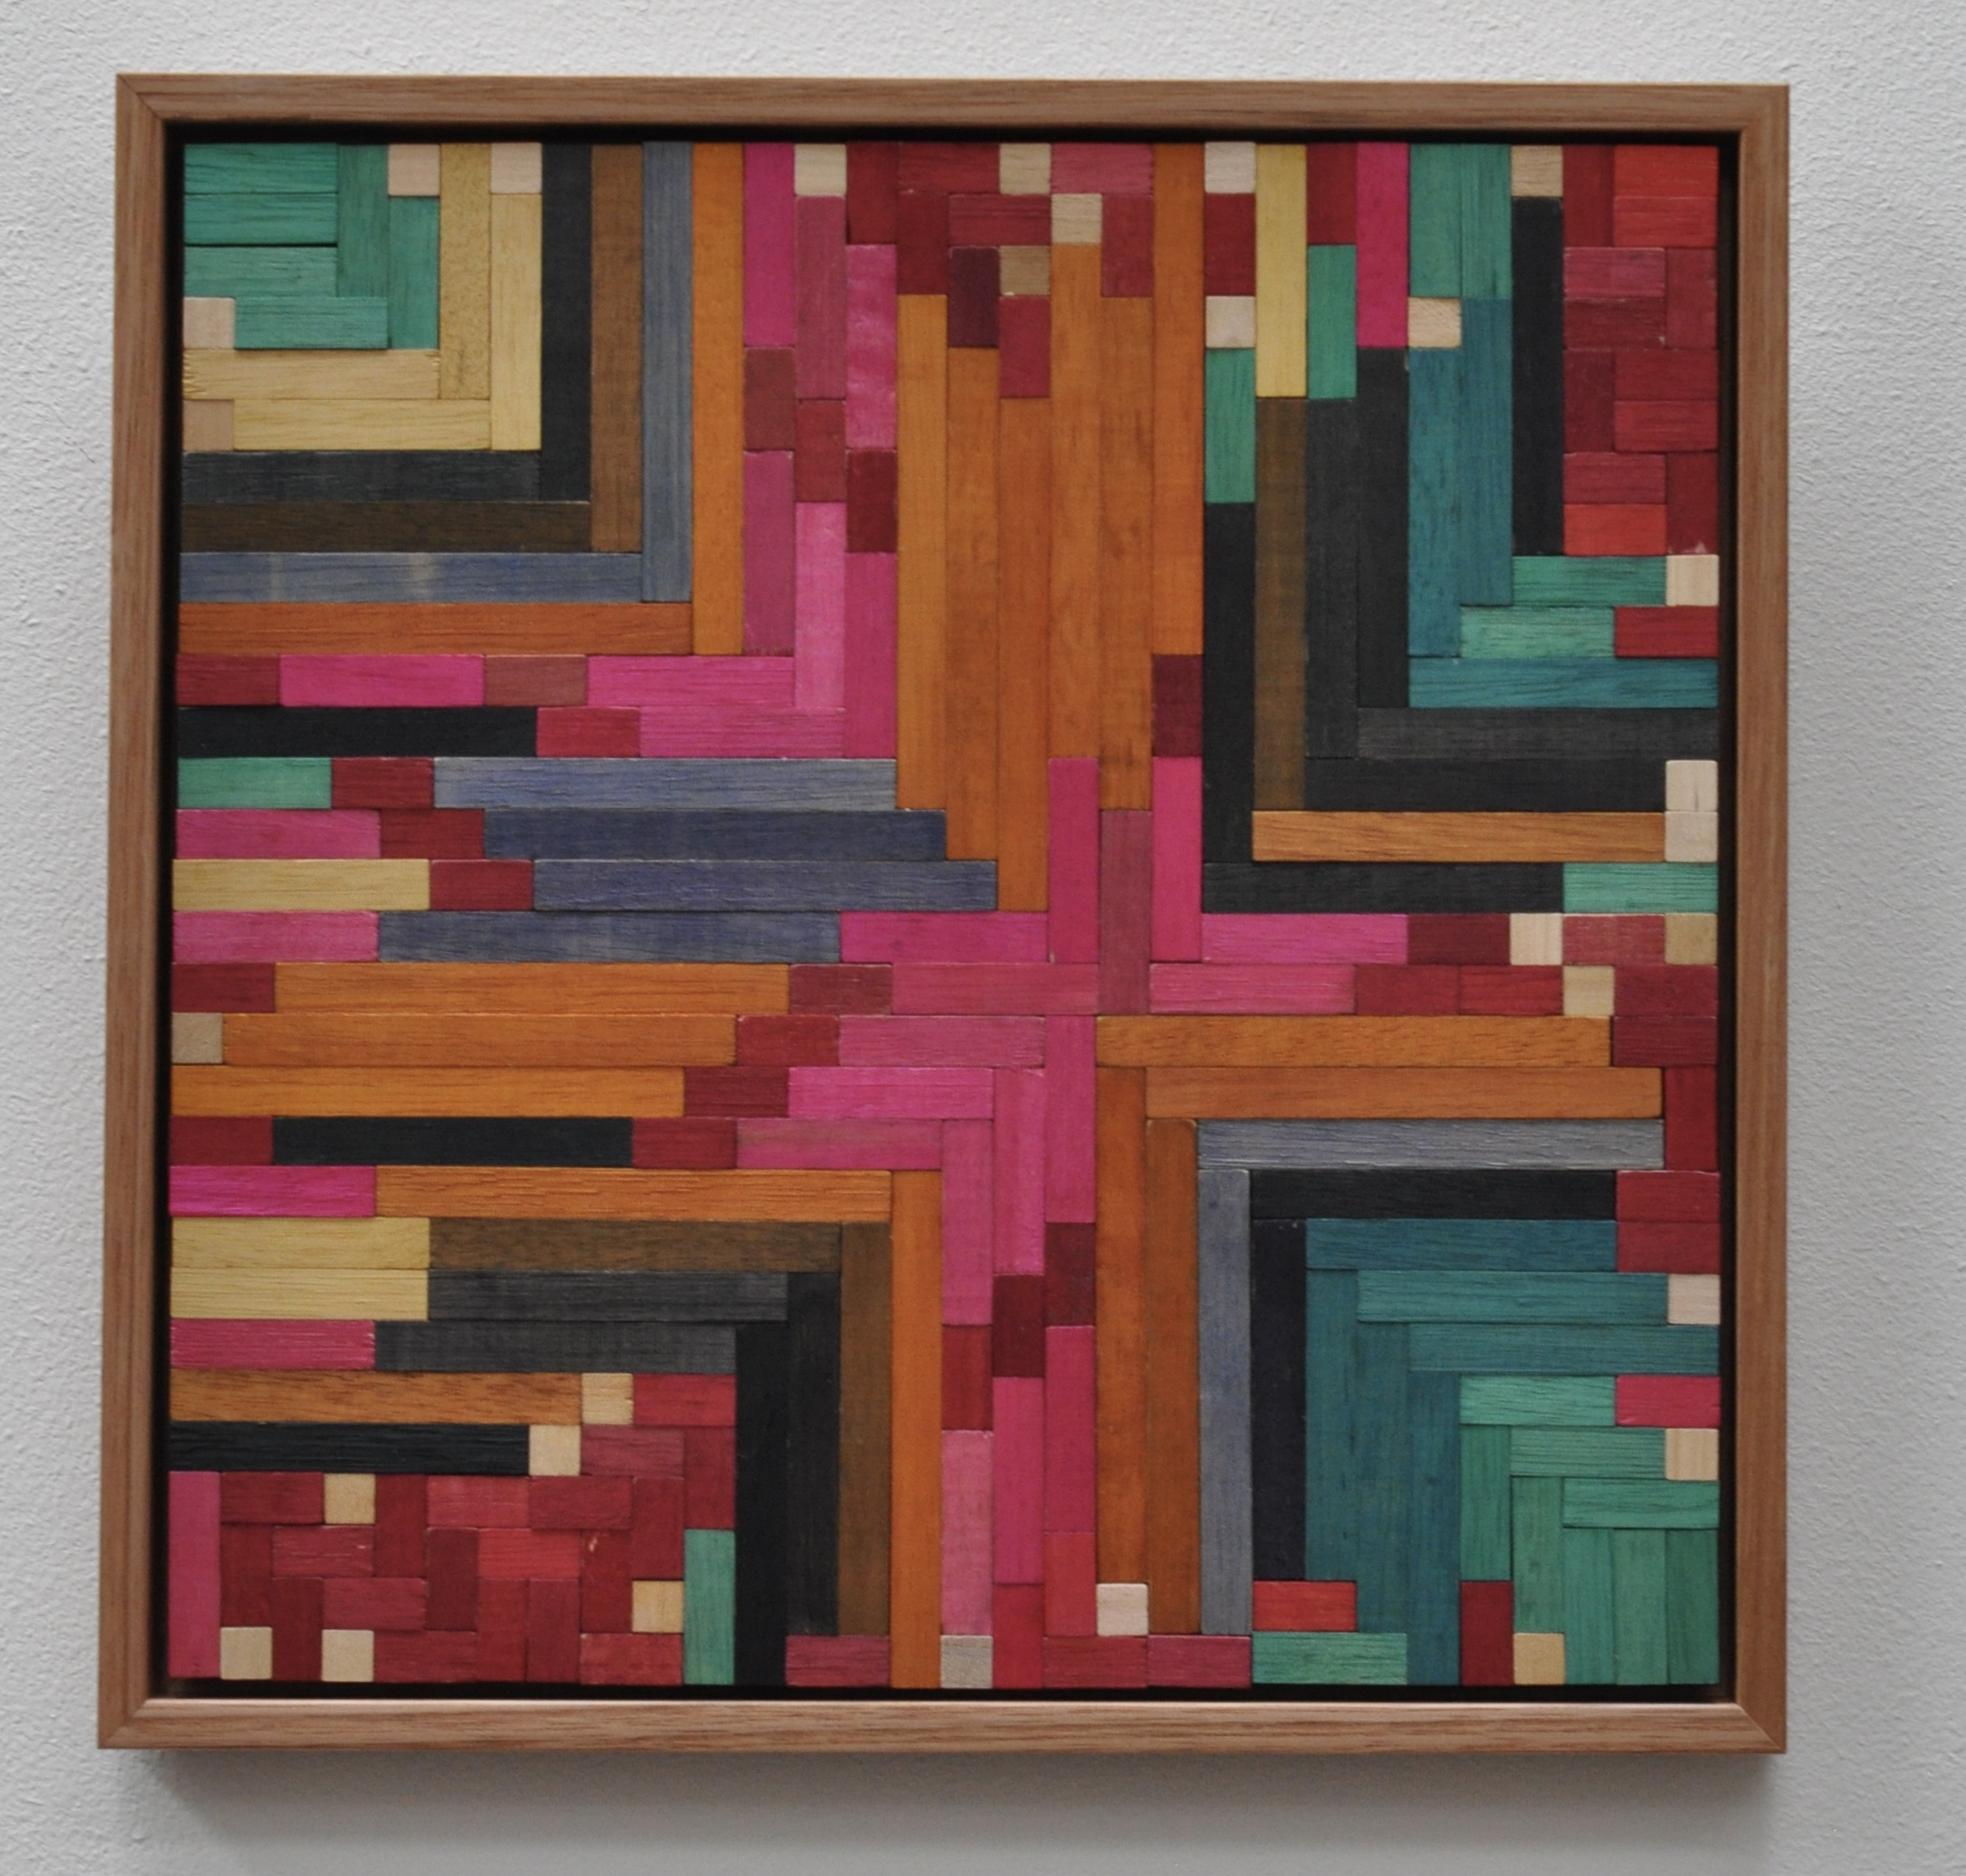 Colour Field 11, Framed wall work by Samantha Arnull